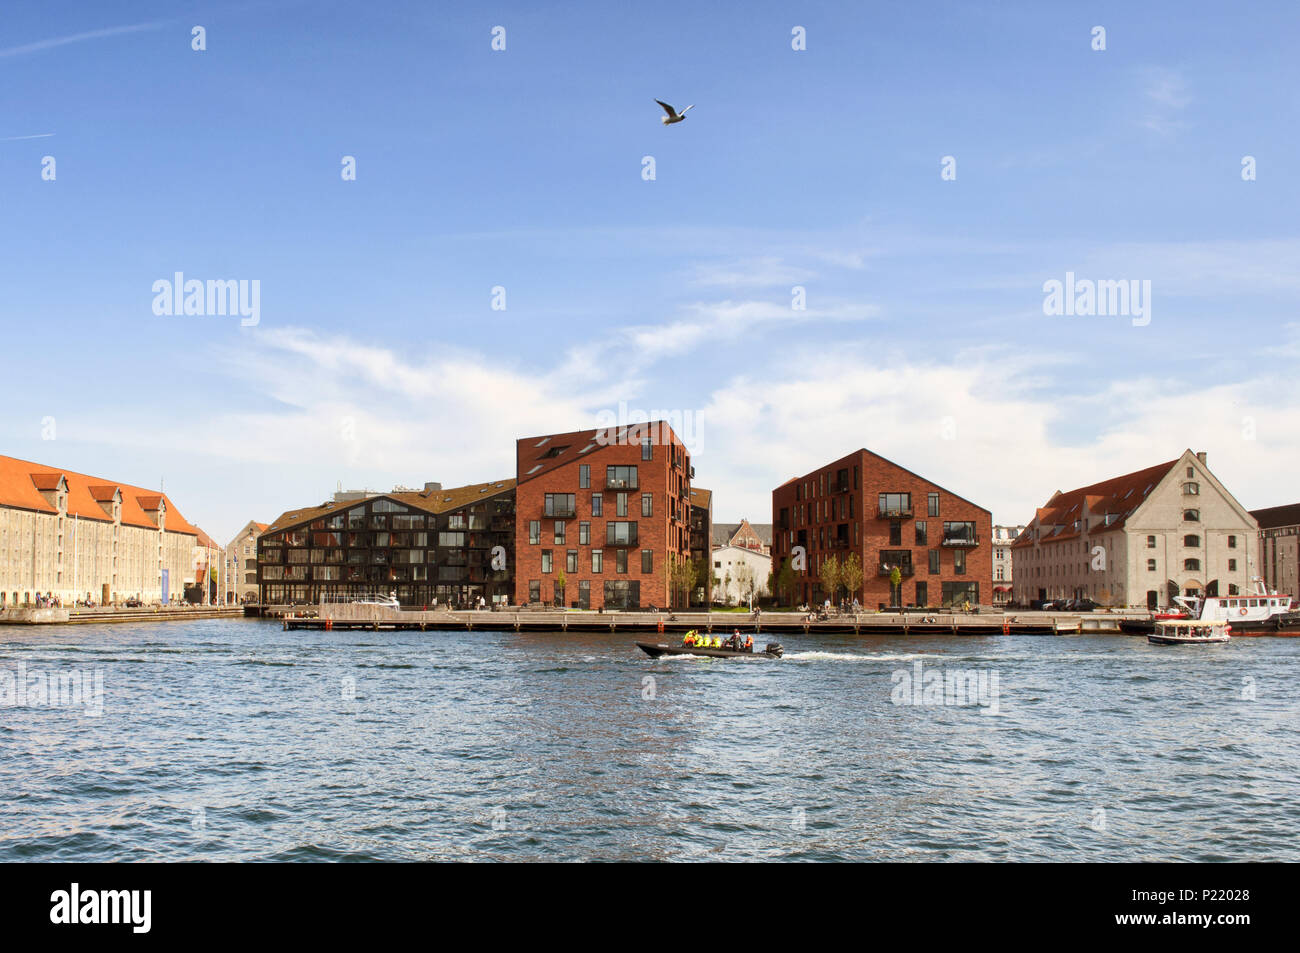 A view of buildings, sea and a boat. Copenhagen. Denmark. Scandinavian architecture design. Stock Photo